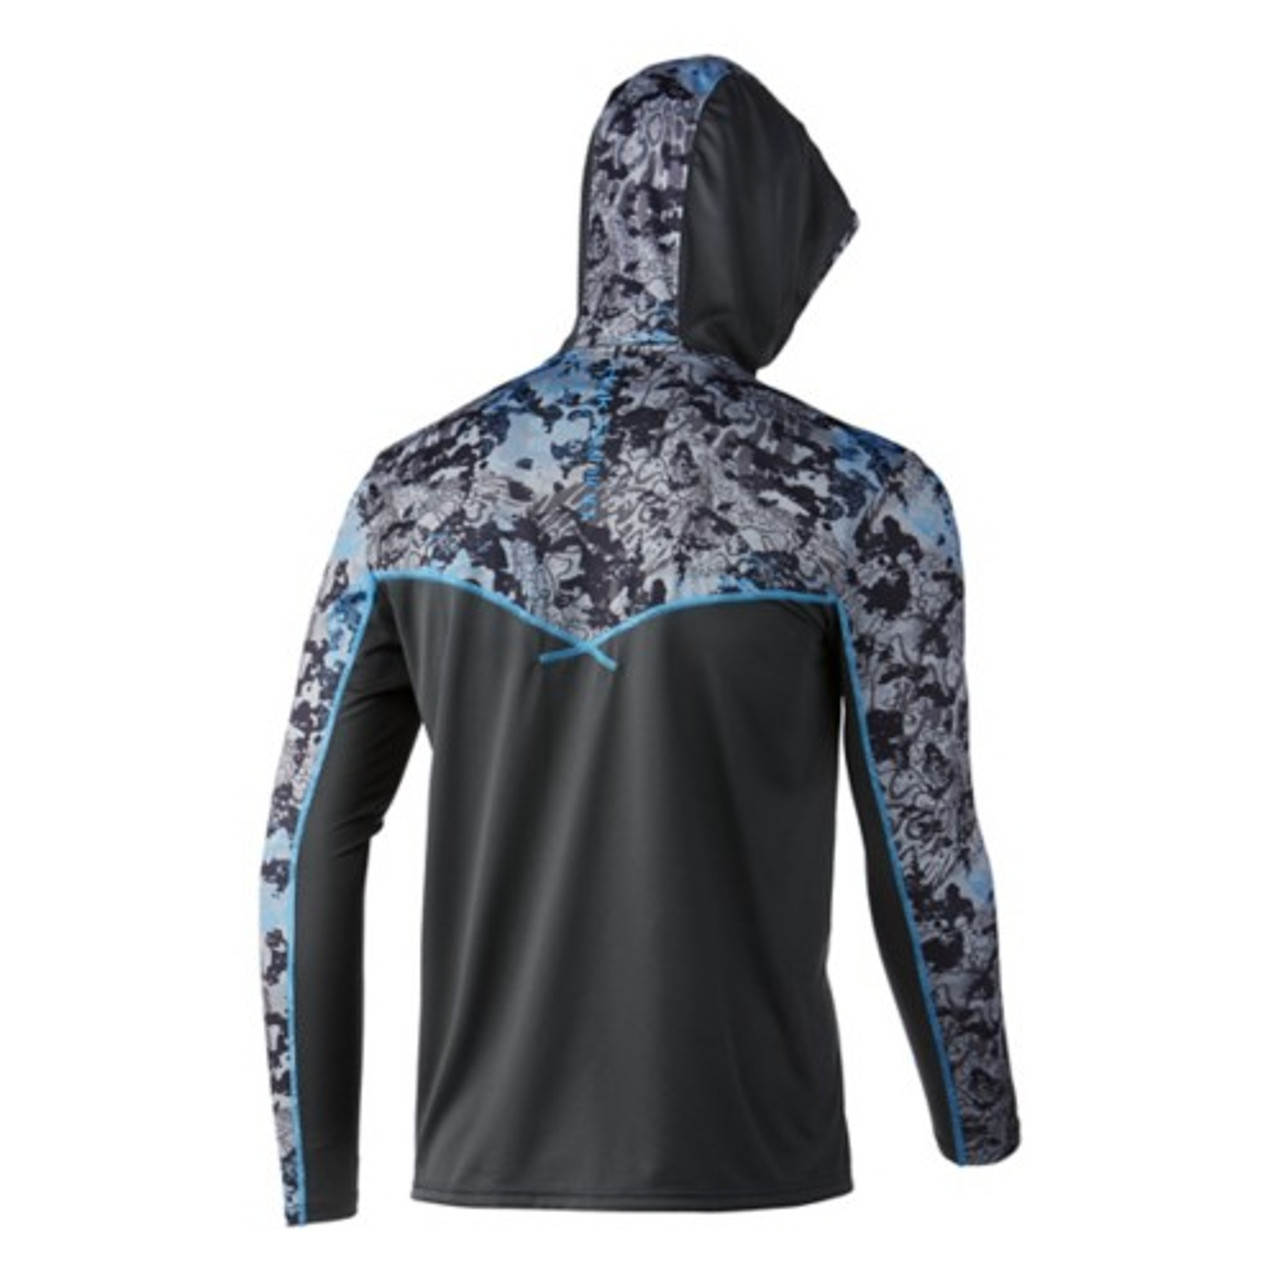 Huk Hooded Fishing Shirt Blue Full Zip Up Long Sleeve Breathable Mesh Size  XL